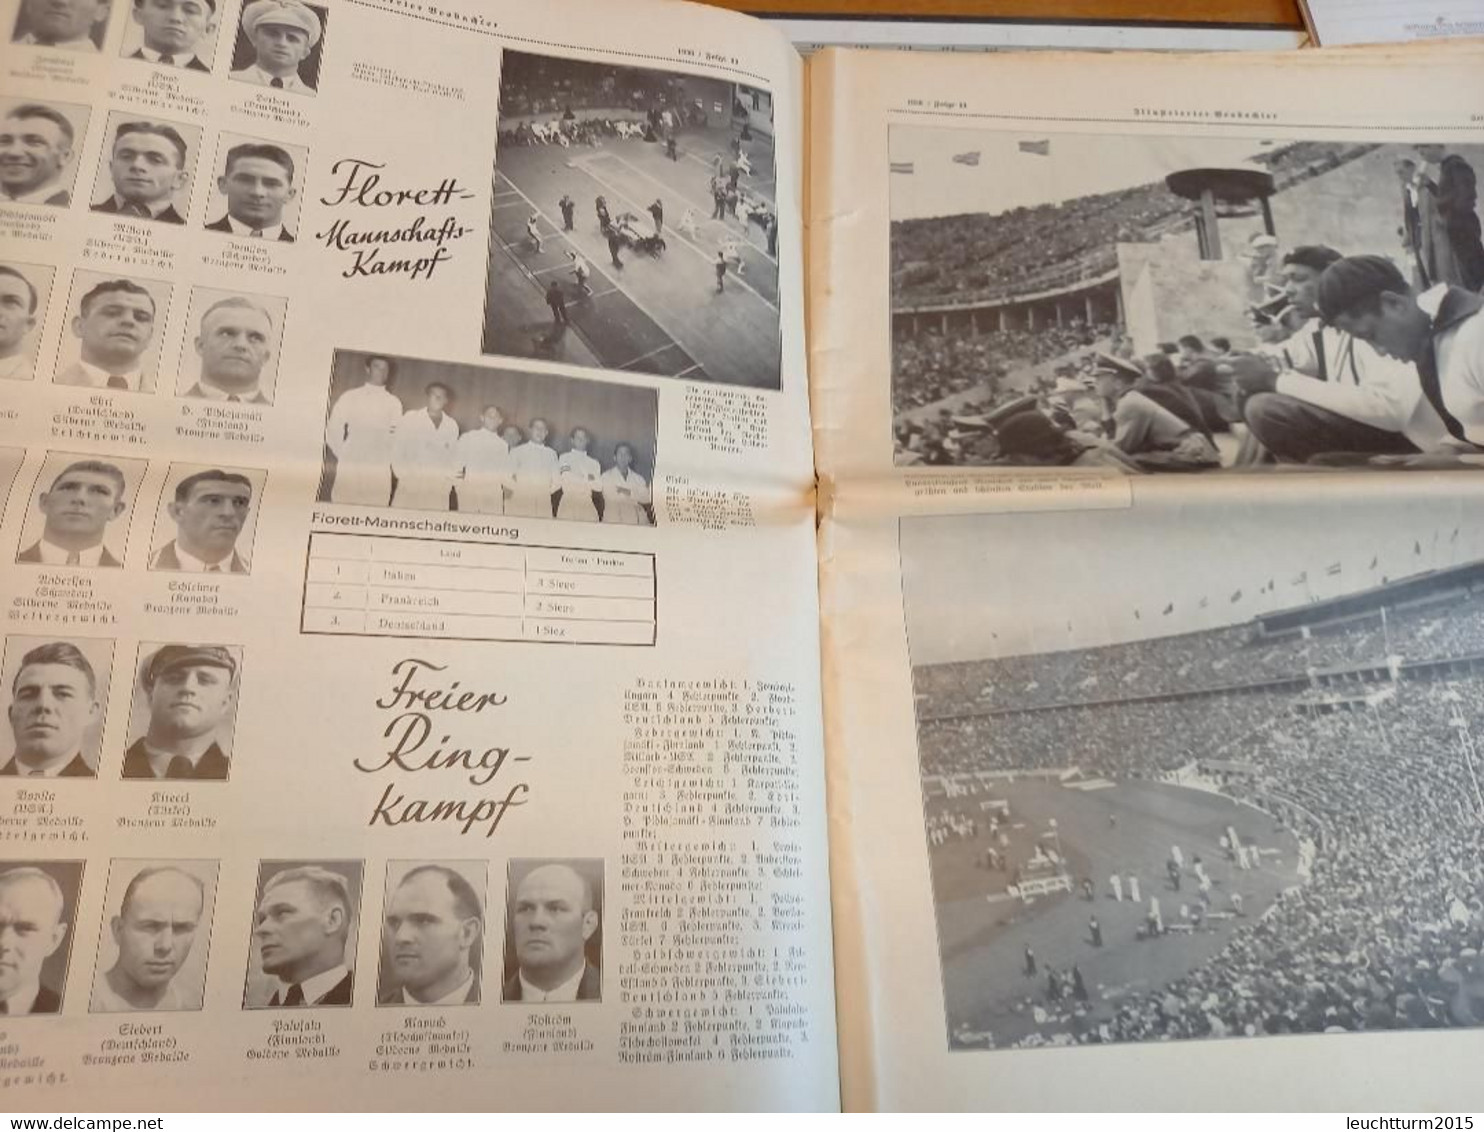 JB Illustrierter Beobacher 13.8.1936 Olympia-Tagebuch - Sports